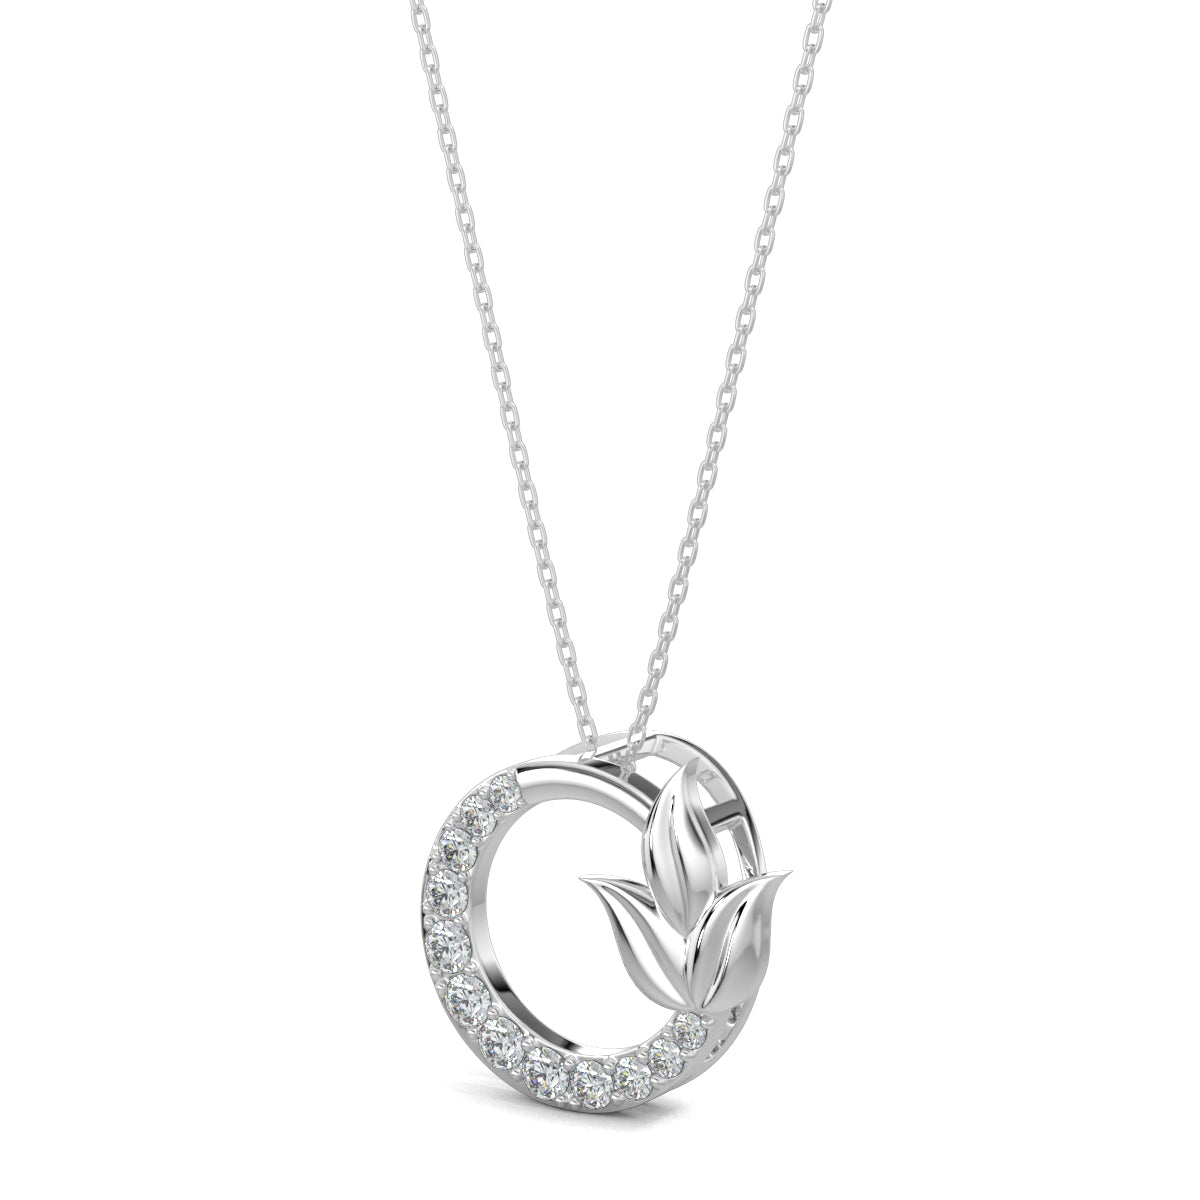 White Gold, diamond pendant, natural diamonds, lab-grown diamonds, chic petal pendant, circular pendant, elegant jewelry, modern pendant, women's accessory, fashion pendant